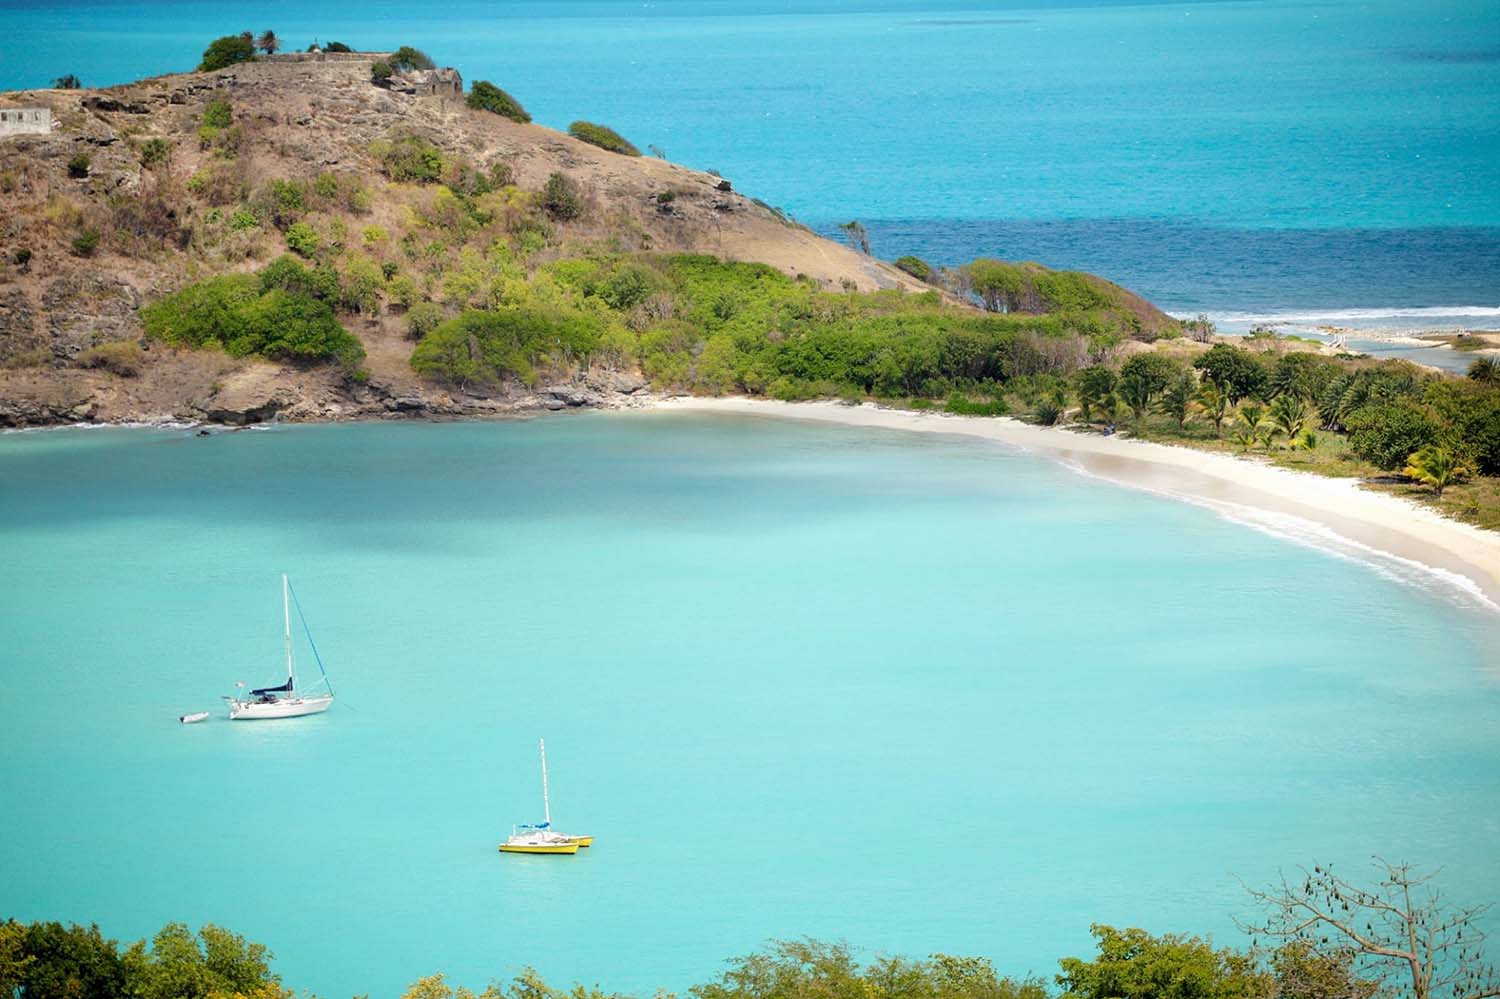 Sustainable Tourism for Antigua and Barbuda, Dario Item as UNWTO Representative